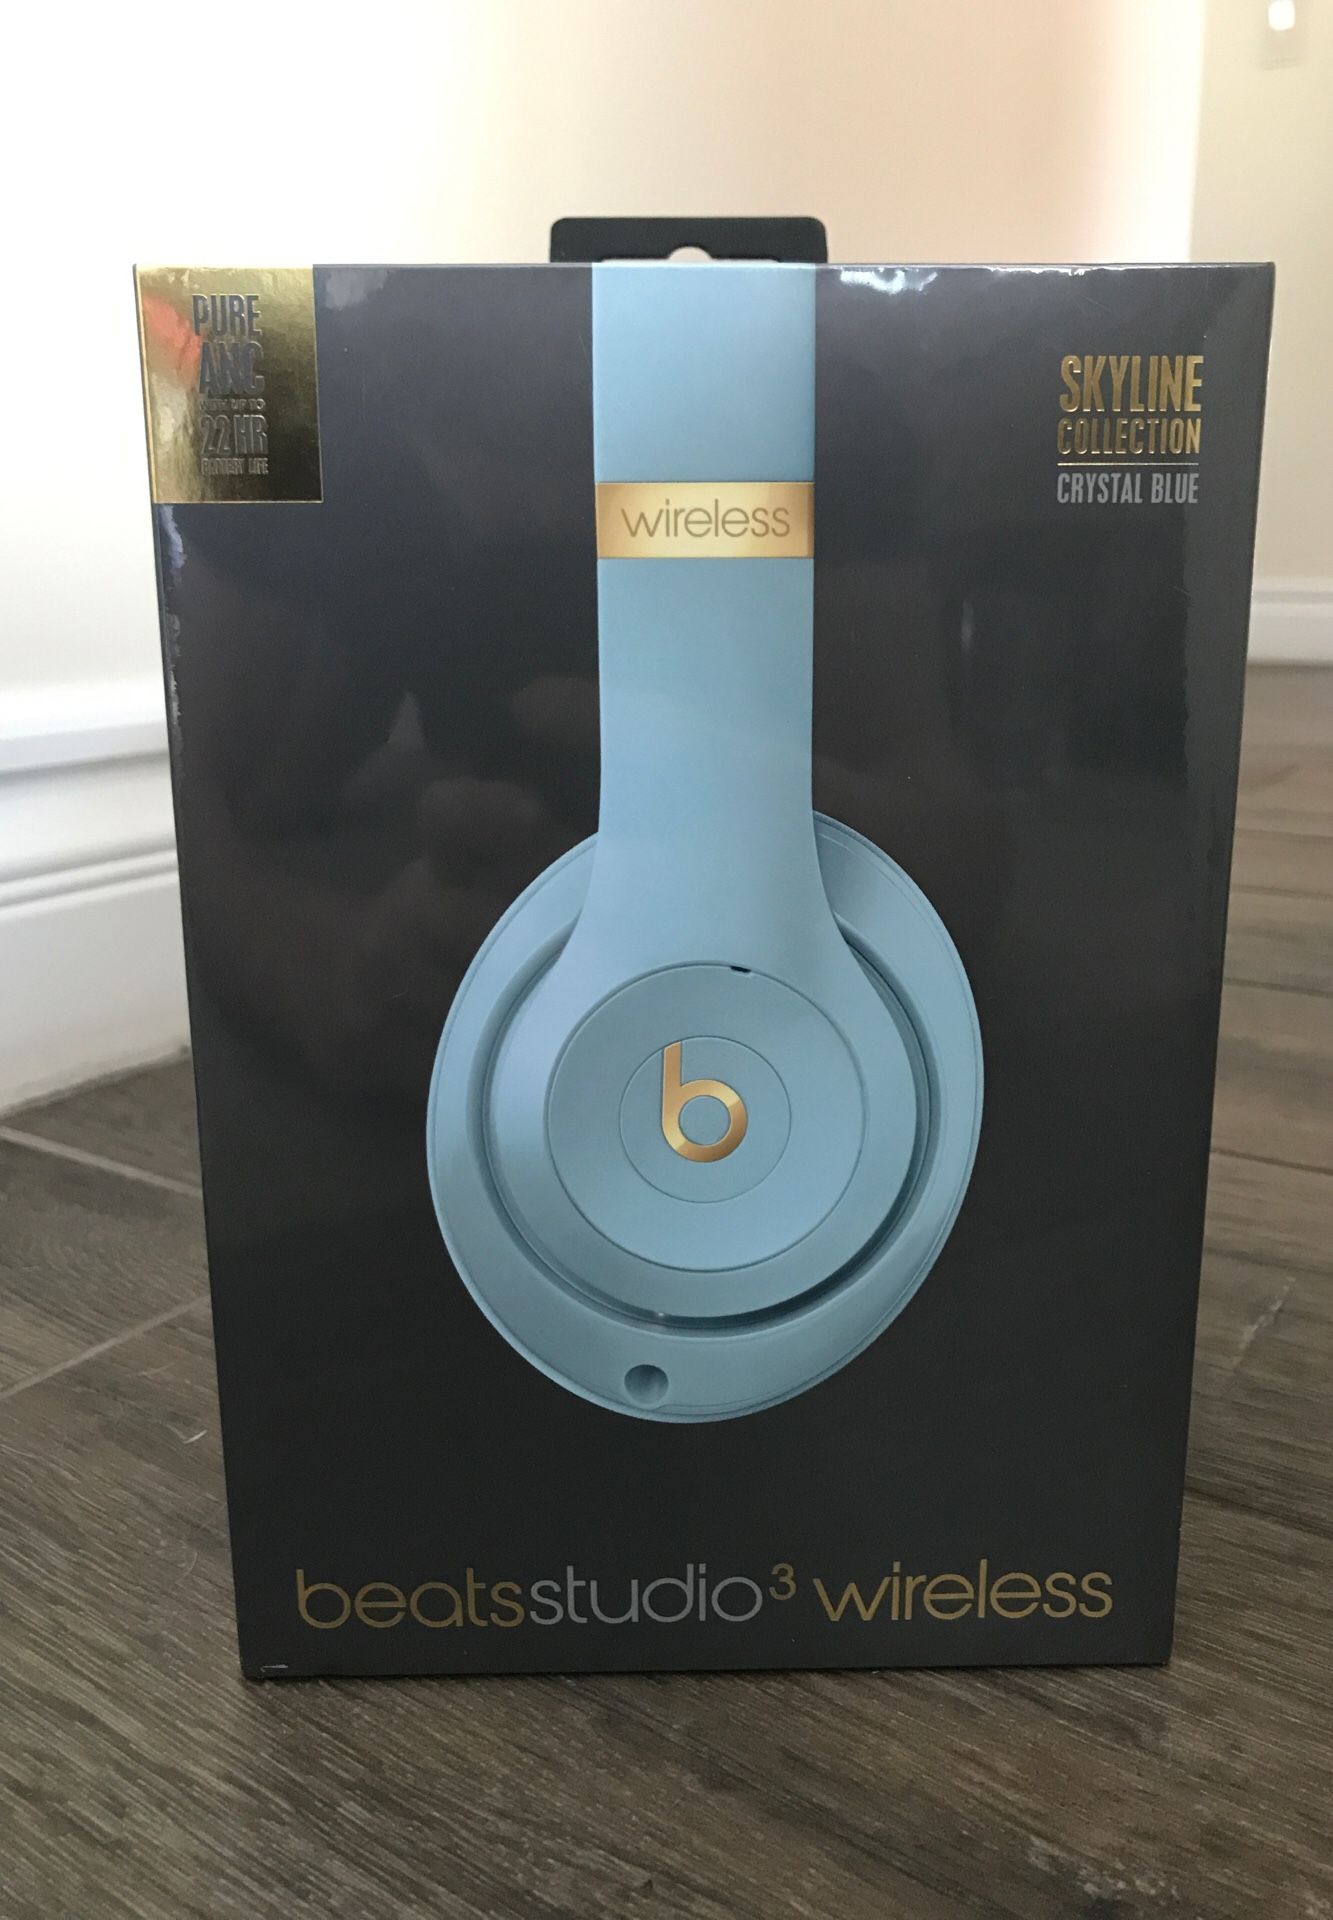 Beats studio 3 wireless crystal blue sealed (brand new)